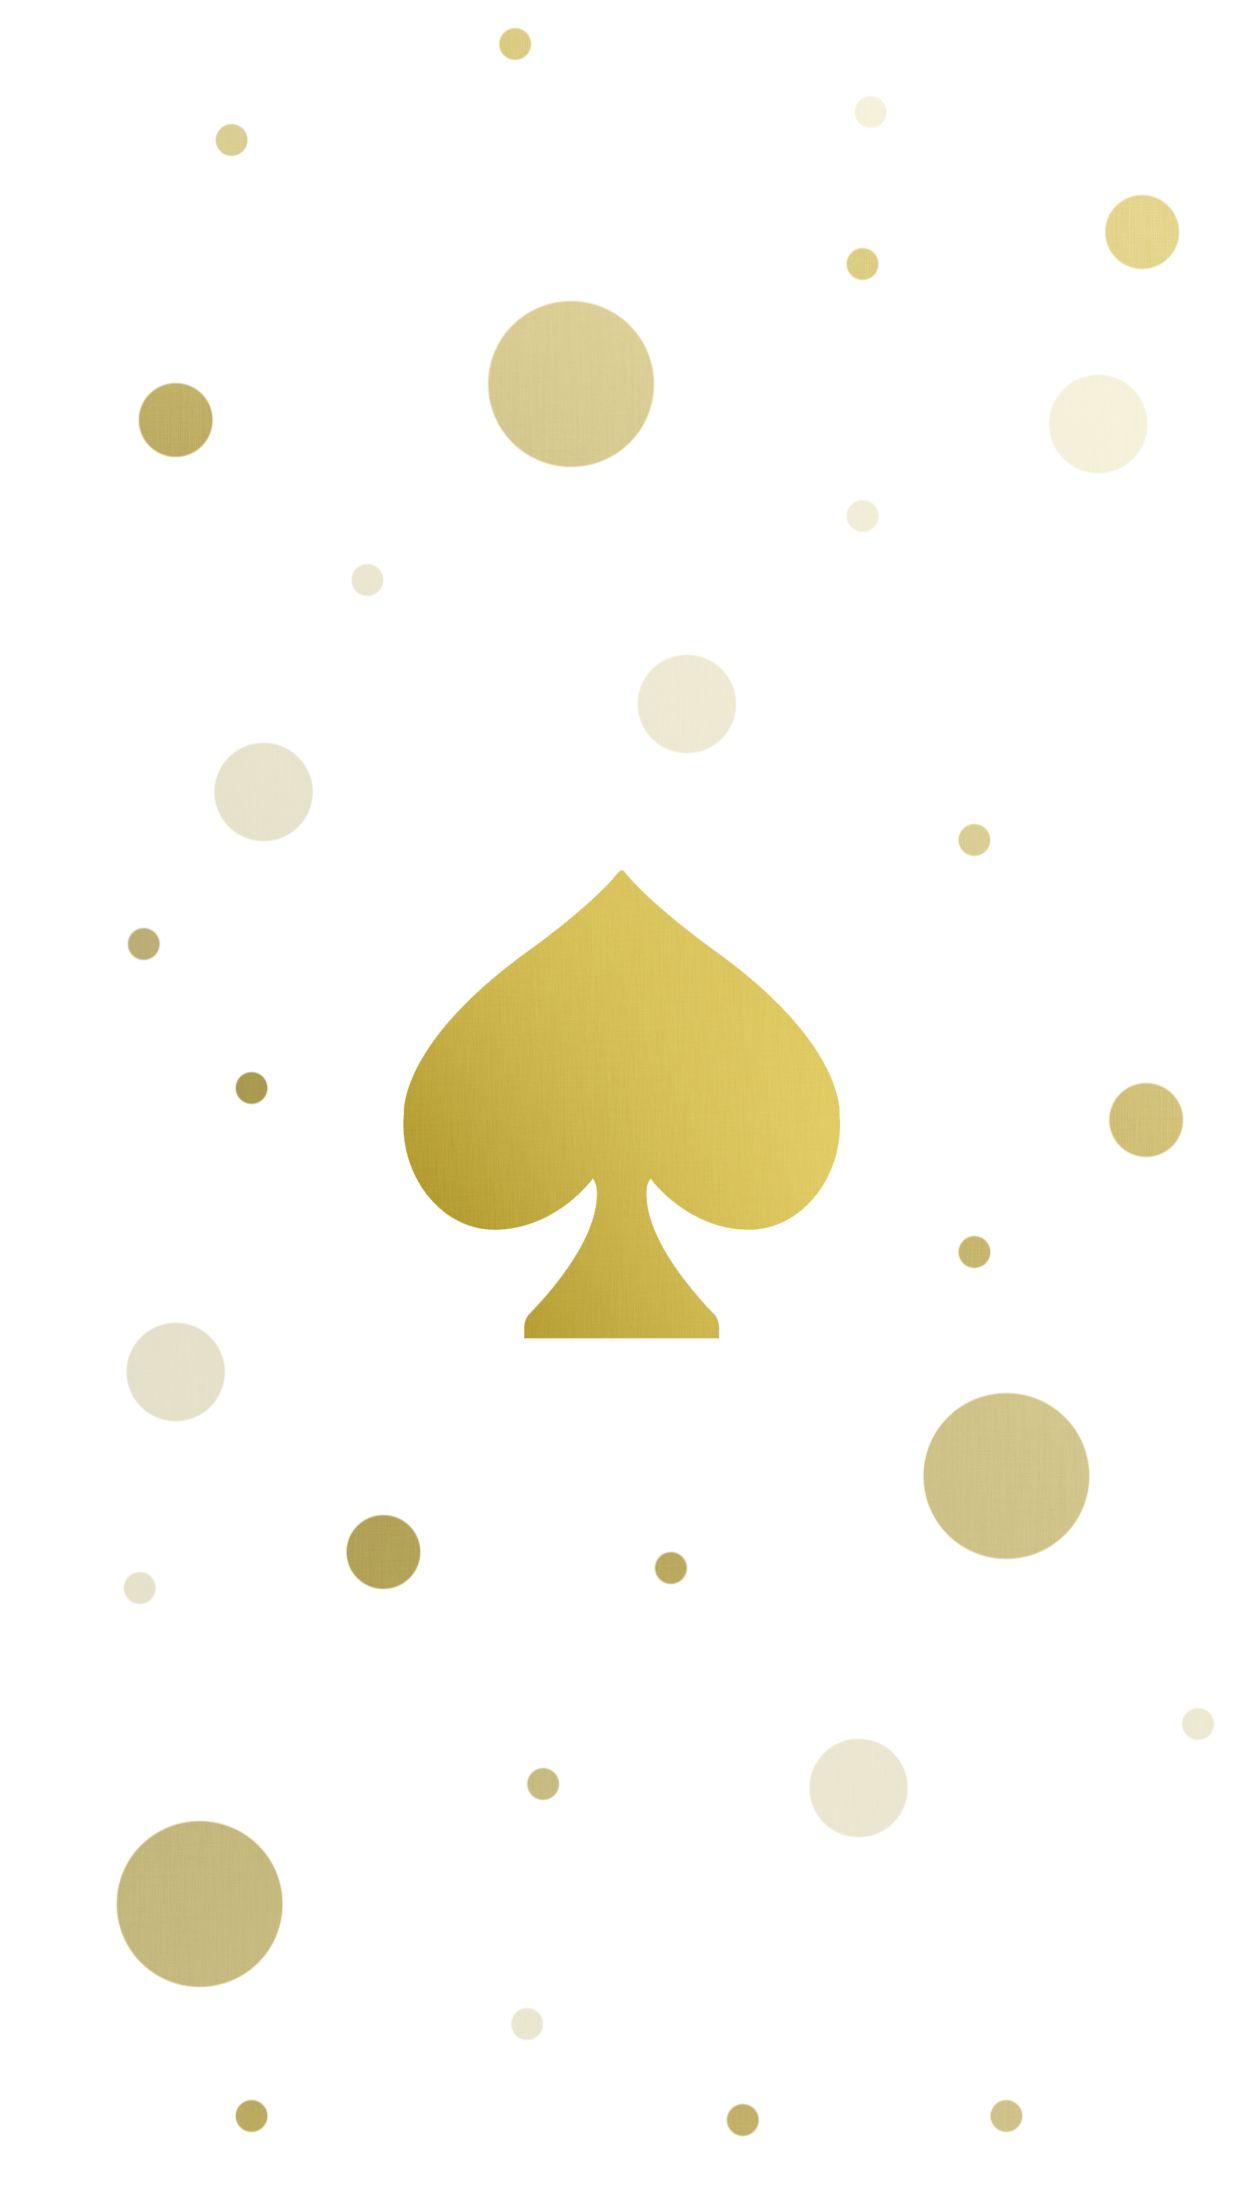 Gold Kate Spade Logo - Kate spade gold iPhone Wallpaper Background | Phone Stuff in 2019 ...